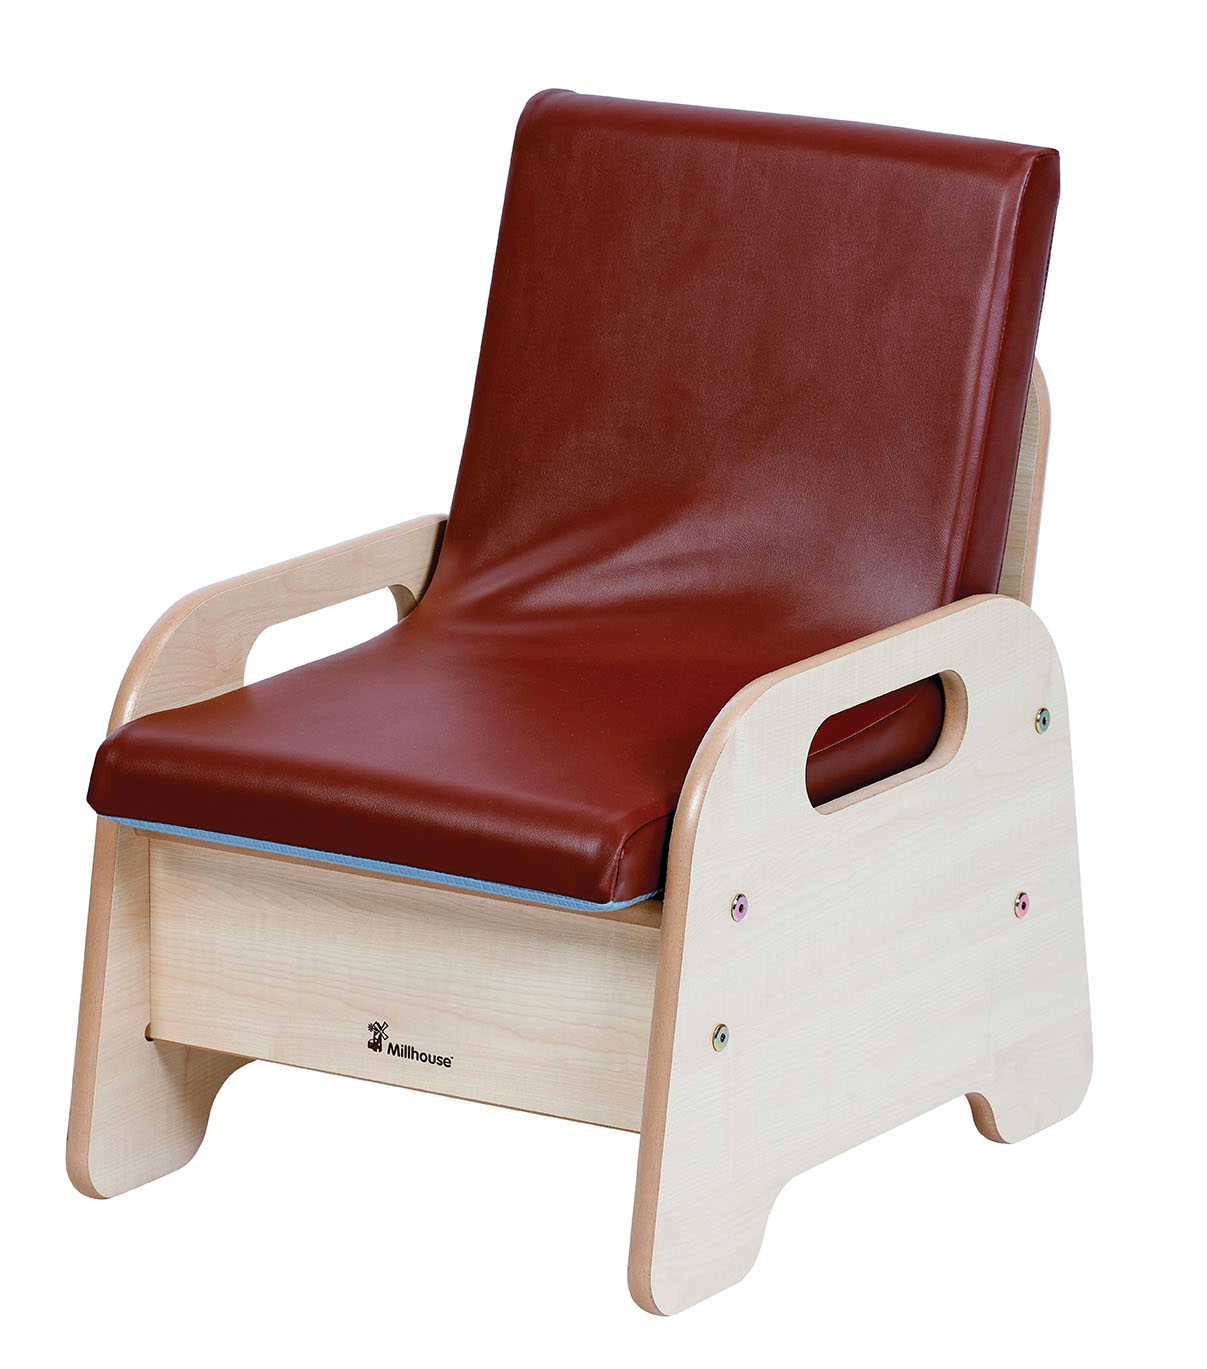 PT972-Millhouse-Early-Years-Furniture-Armchair_Main_RGB.jpg